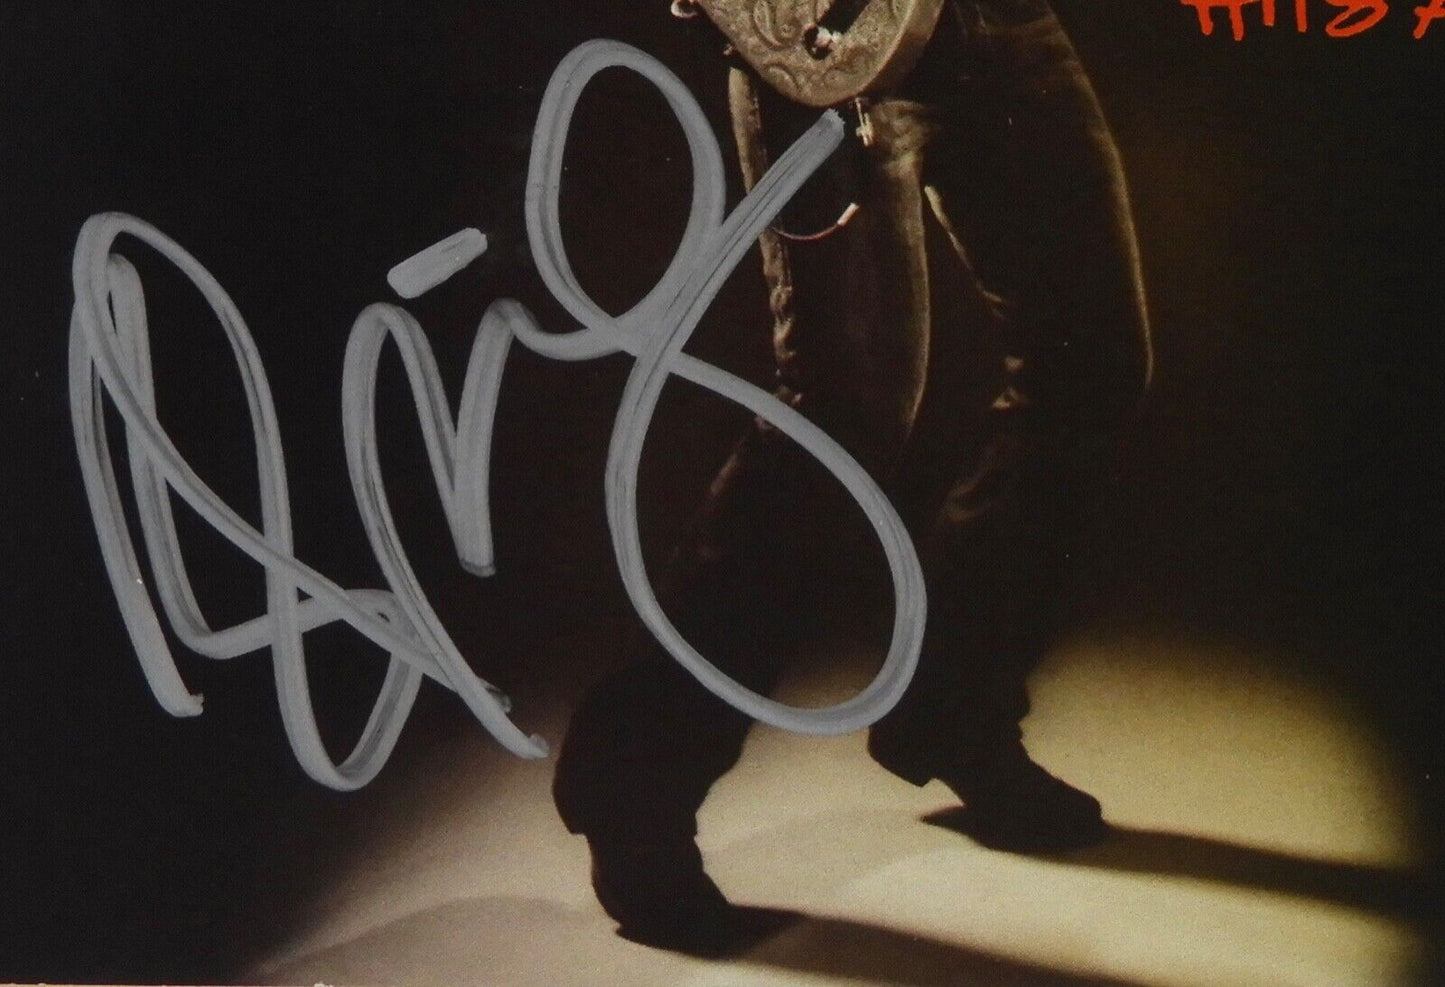 Brad Paisley JSA COA signed autograph CD Booklet Hits Alive